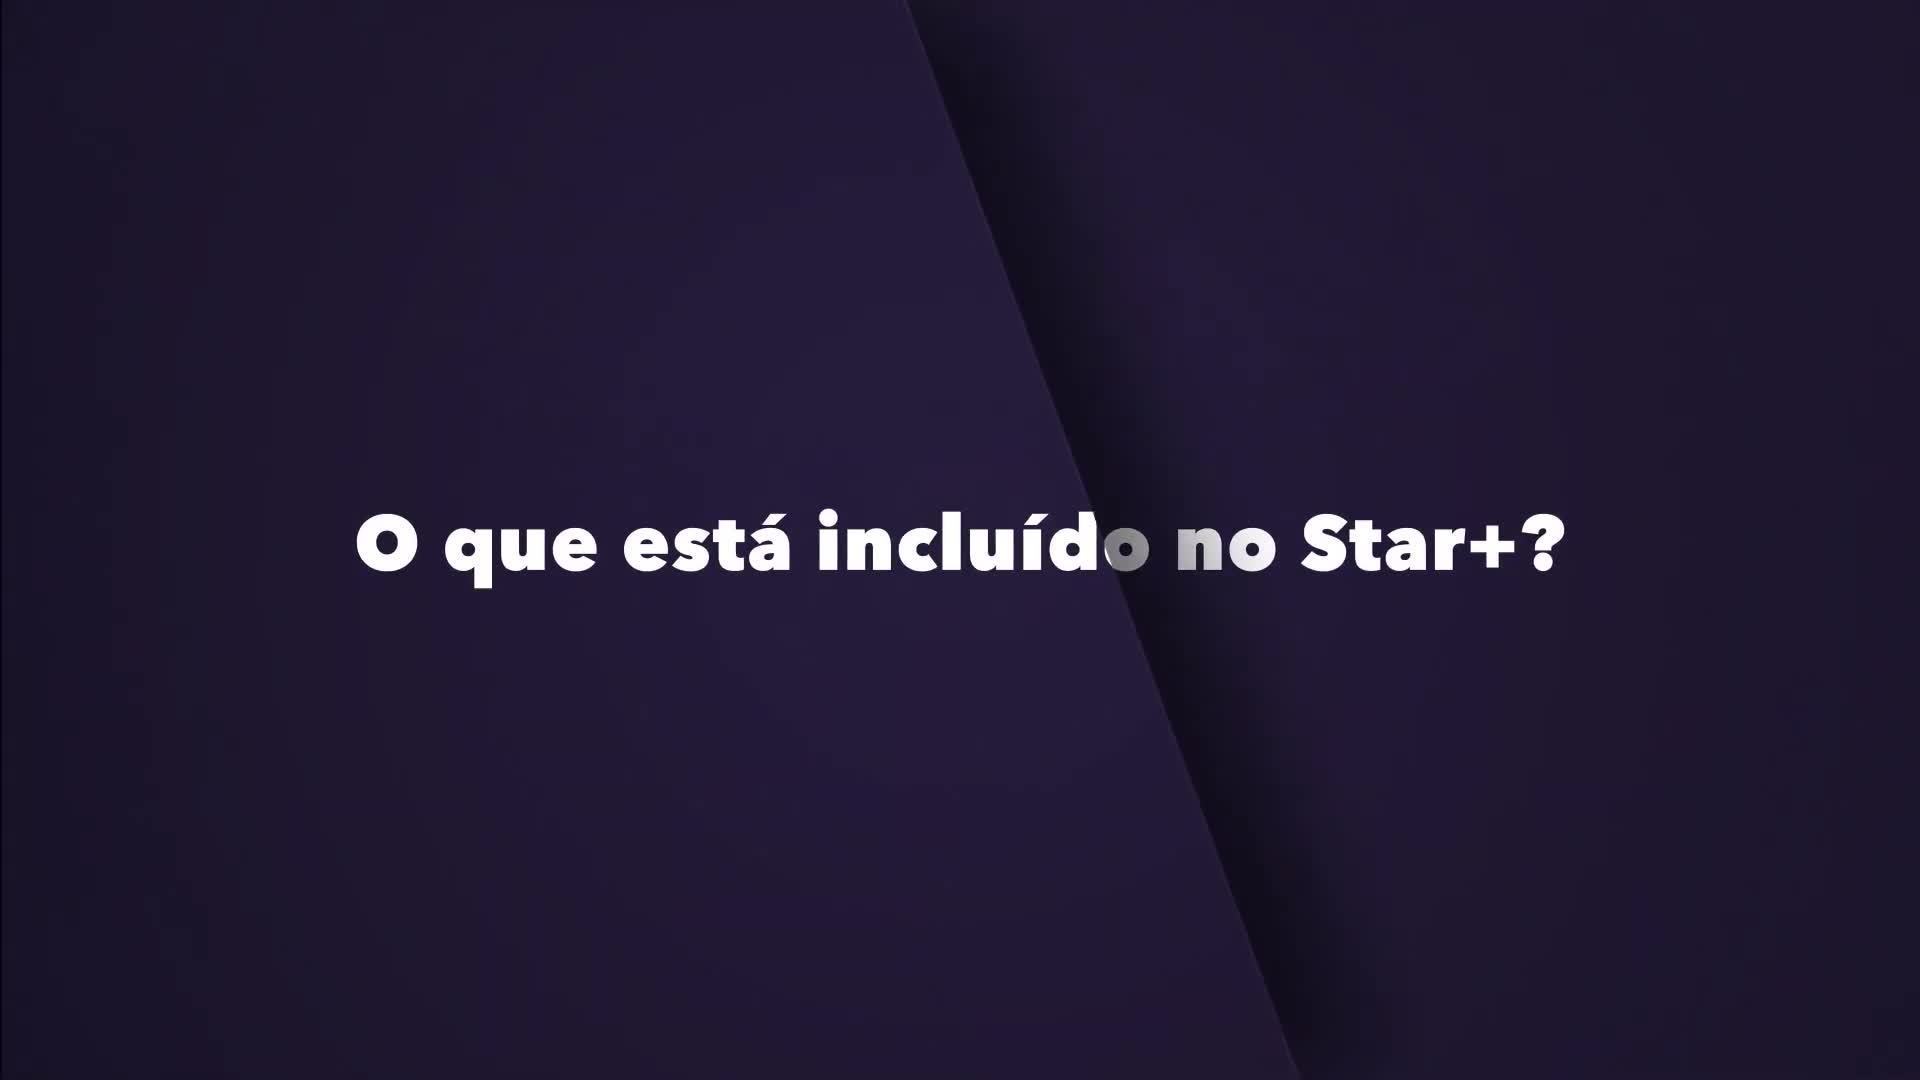 O que está incluido no Star+?